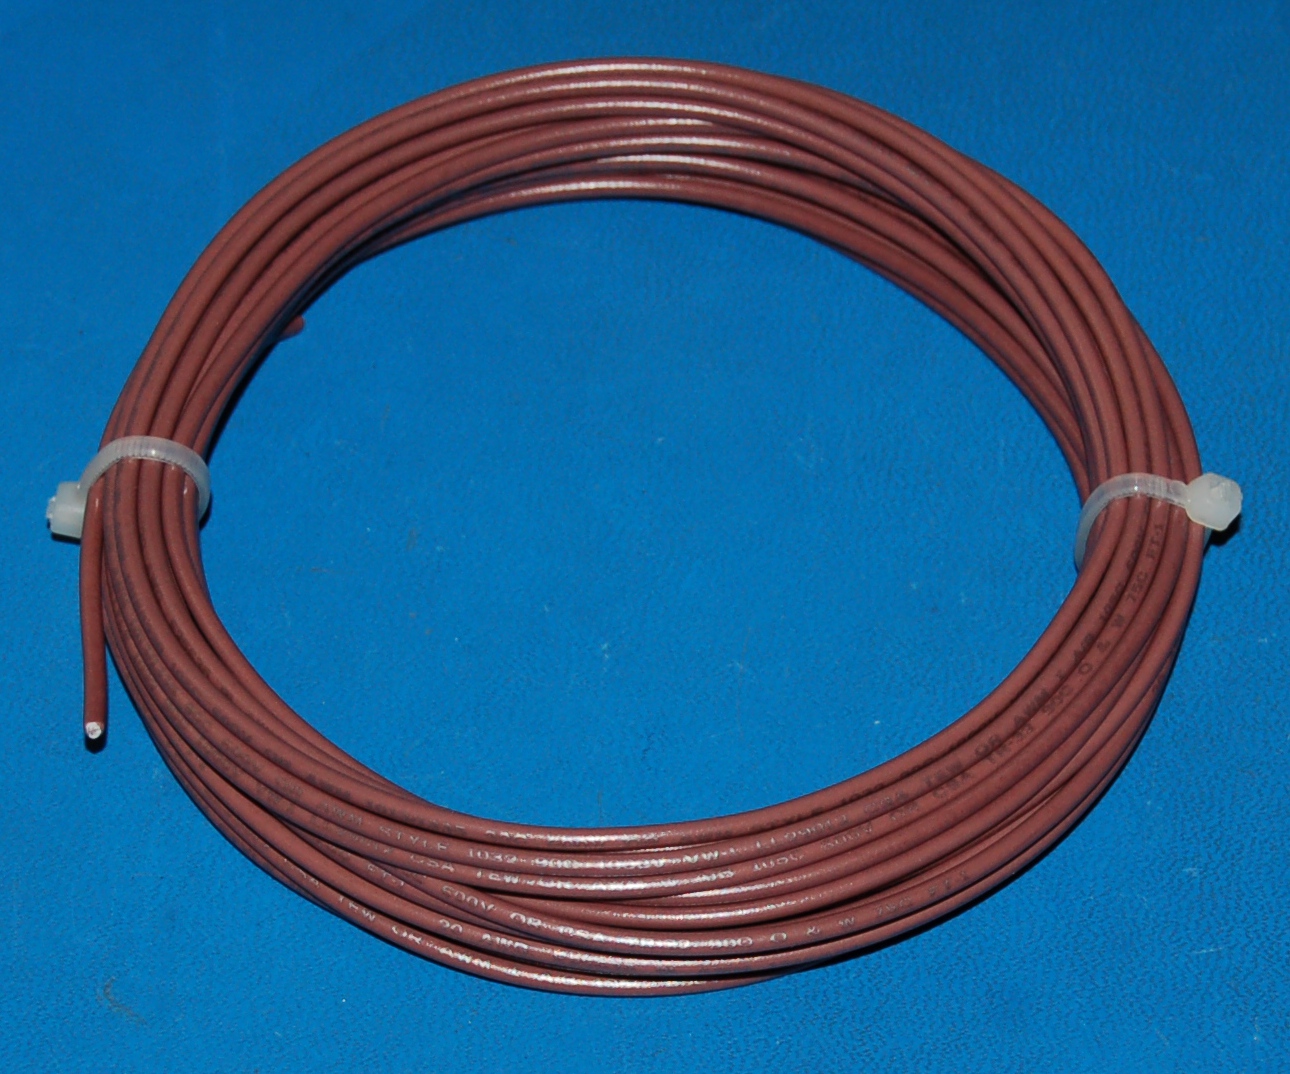 Solid Tinned Copper Wire, 600V, #20 AWG x 25' (Brown) - Cliquez sur l'image pour fermer